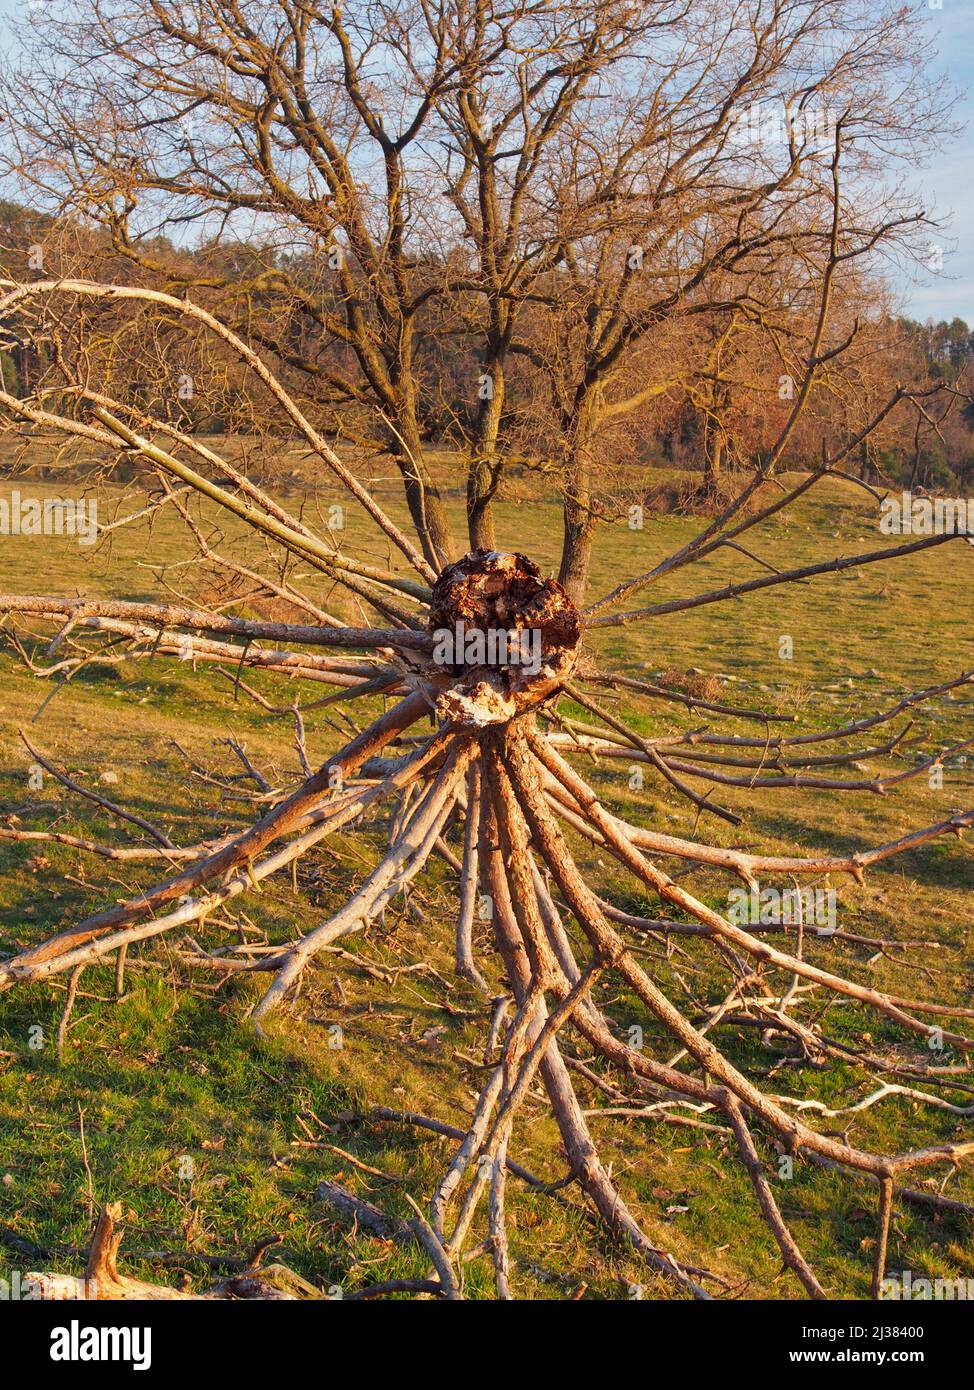 Dead Pine tree branches and winter Oak tree. Alpens village countryside. Lluçanès region, Barcelona province, Catalonia, Spain. Stock Photo